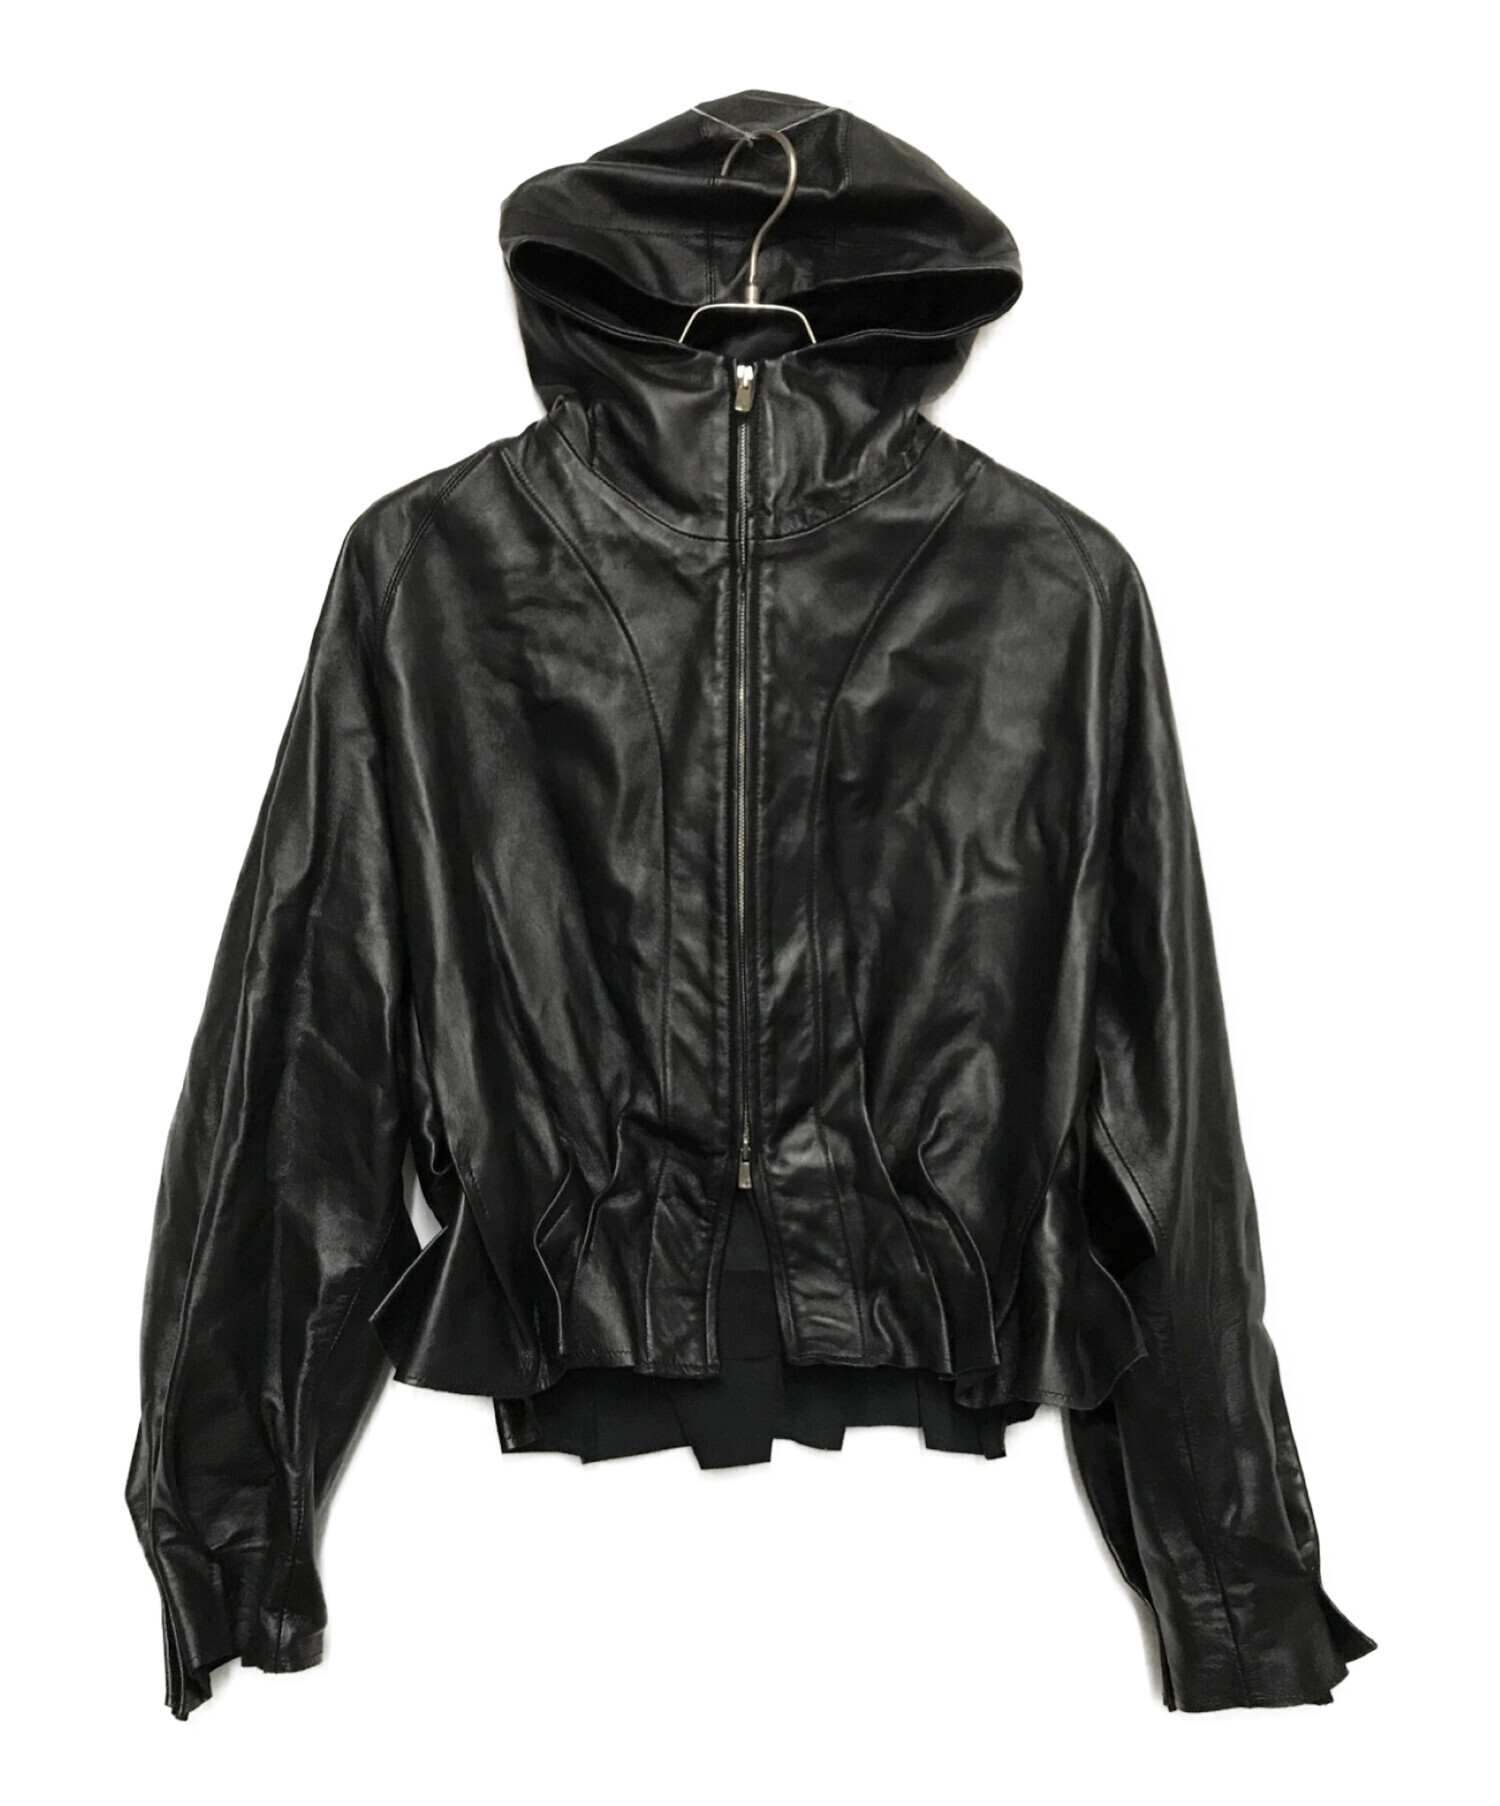 Omar afridi 22aw pleated leather jacket - アウター